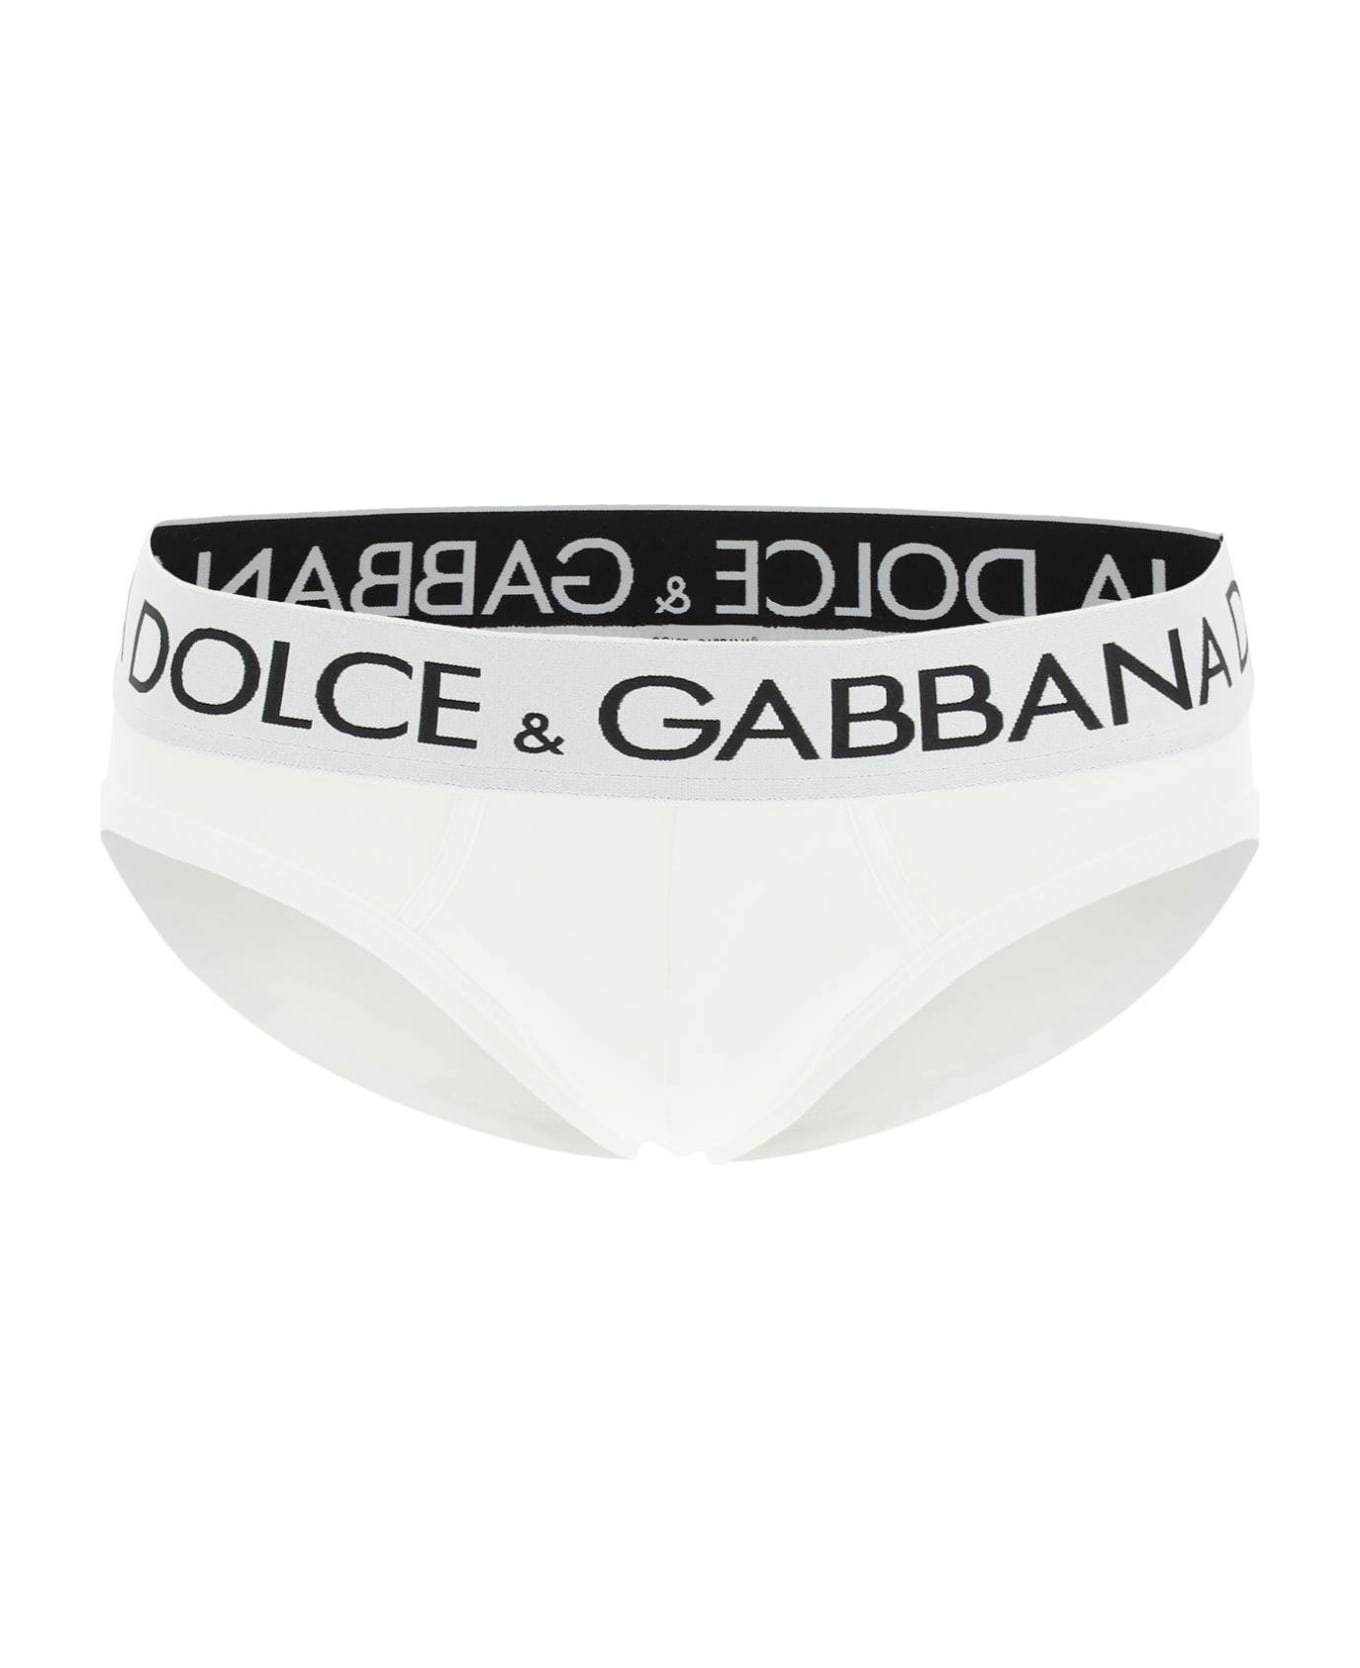 Dolce & Gabbana Logo Band Underwear Brief - BIANCO OTTICO (White) スイムトランクス